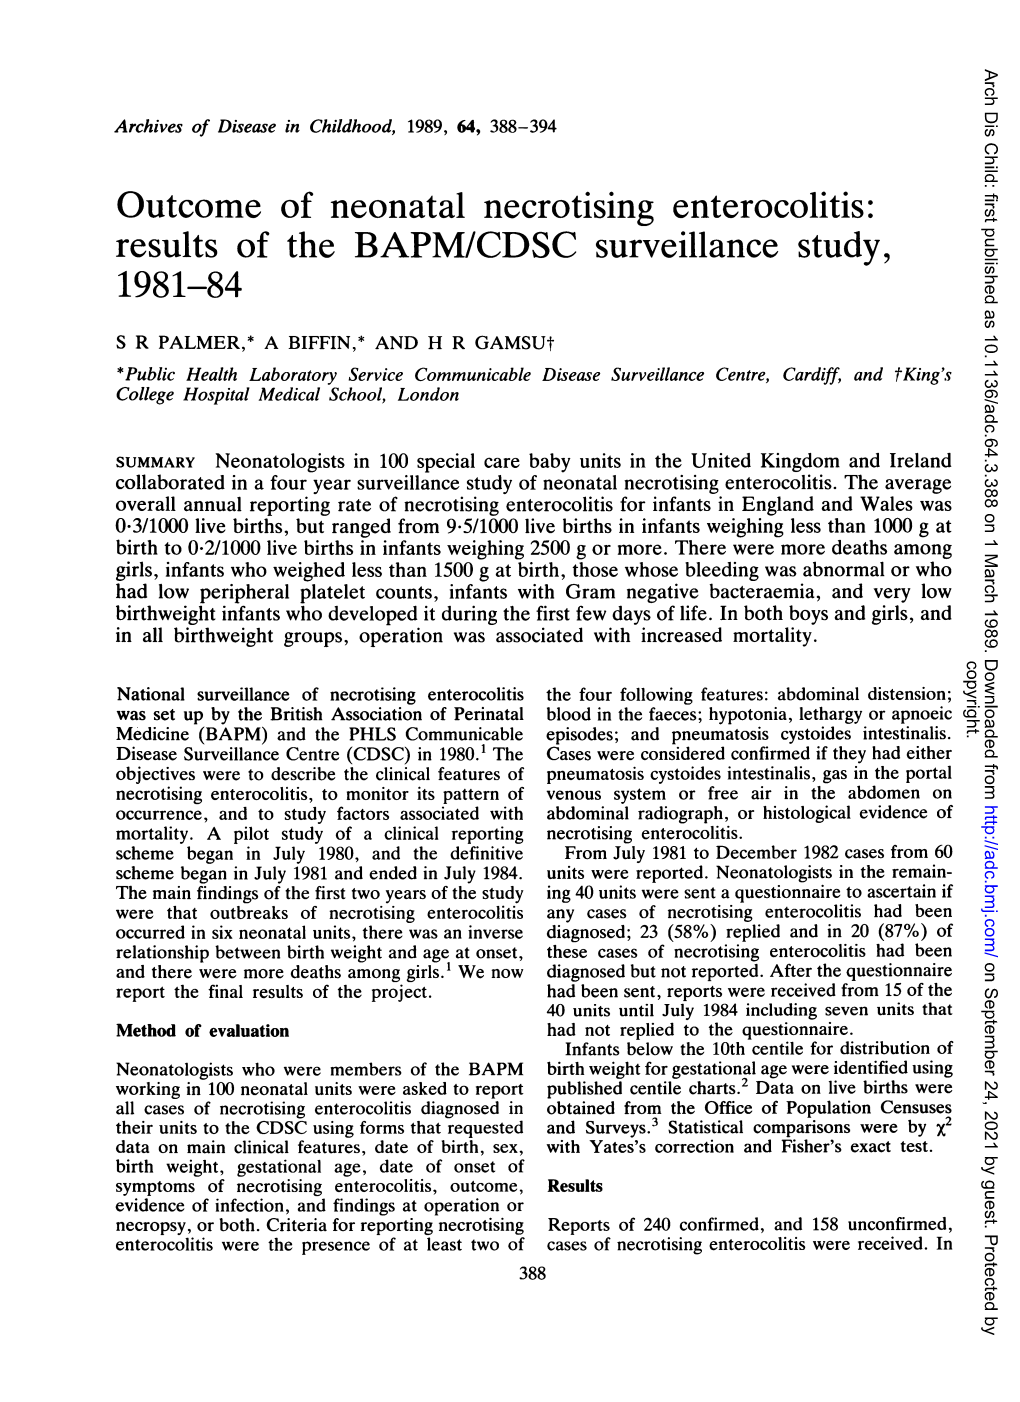 Outcome of Neonatal Necrotising Enterocolitis: Results of the BAPM/CDSC Surveillance Study, 1981-84